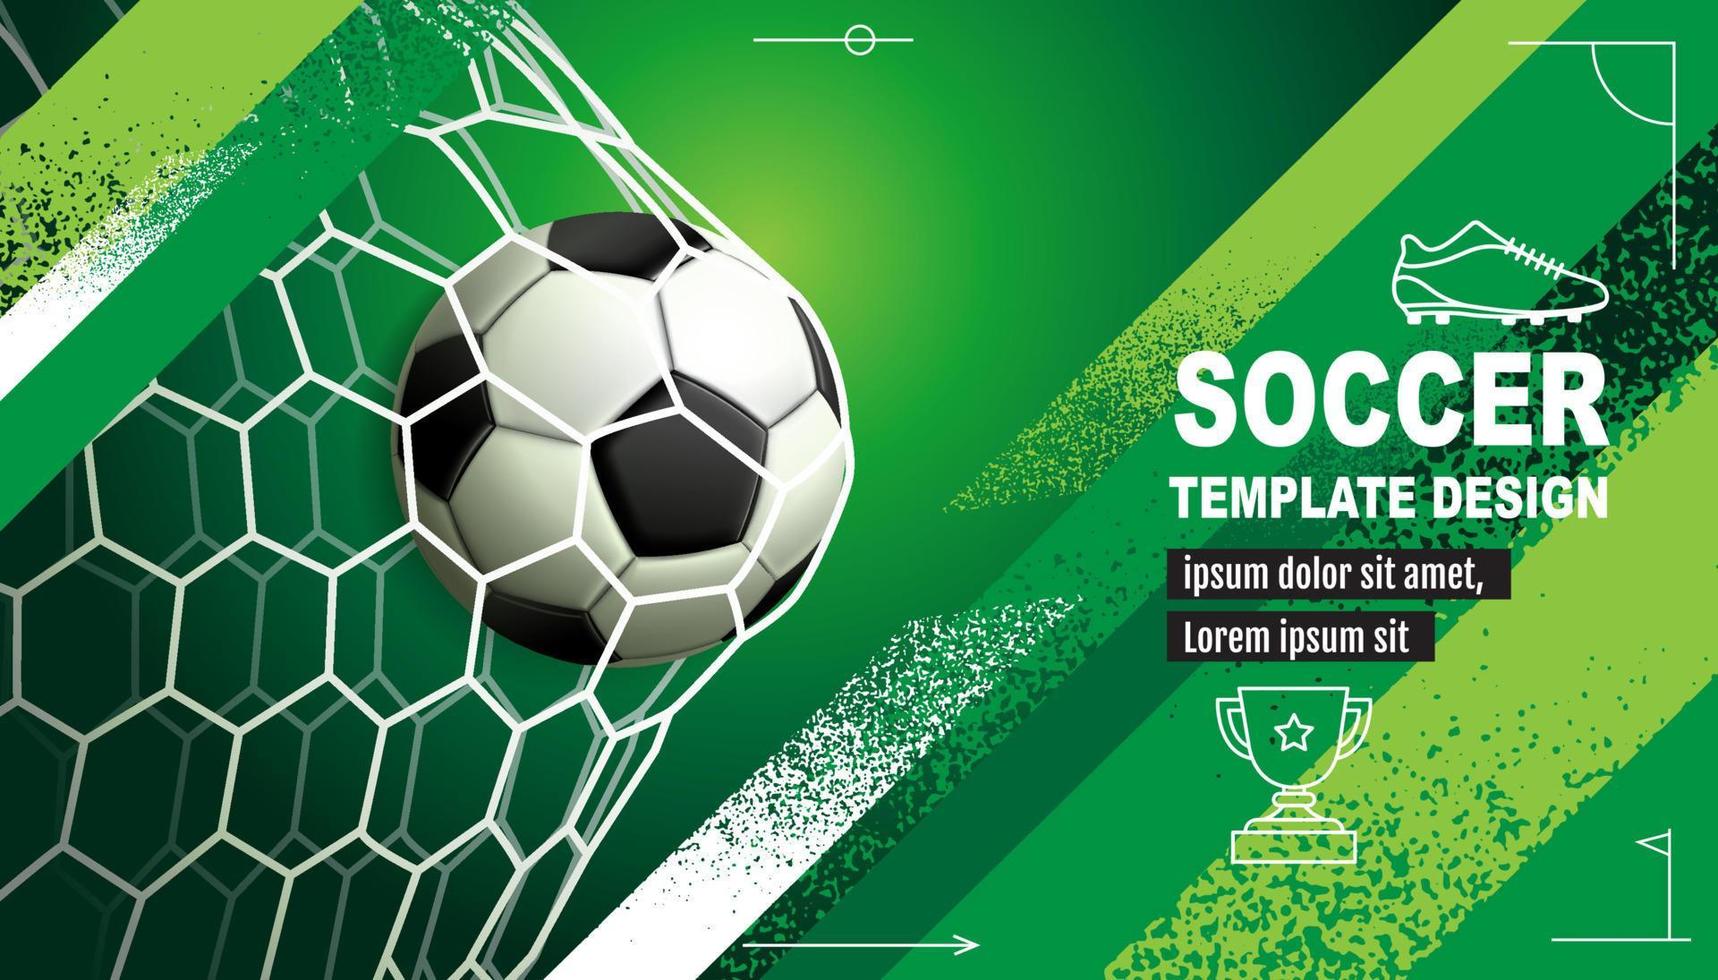 Fußball-Template-Design, Fußball-Banner, Sport-Layout-Design, grünes Thema, Vektorillustration vektor